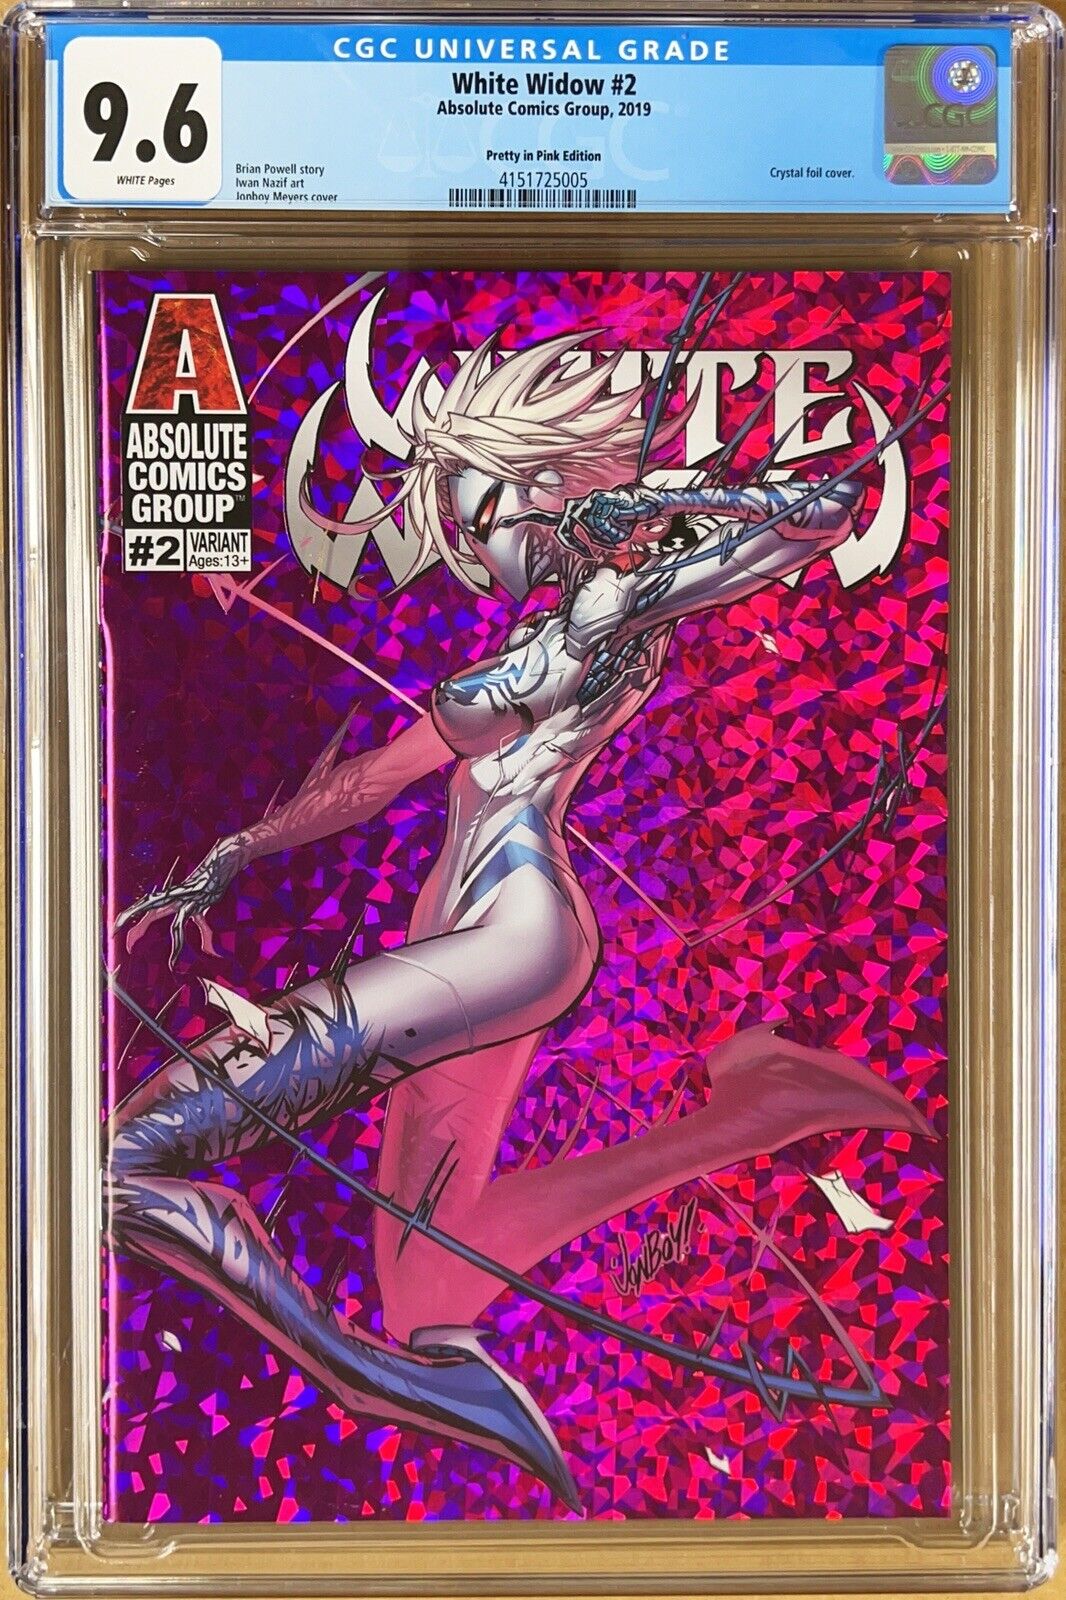 White Widow #2 - Pretty In Pink Edition- CGC 9.6